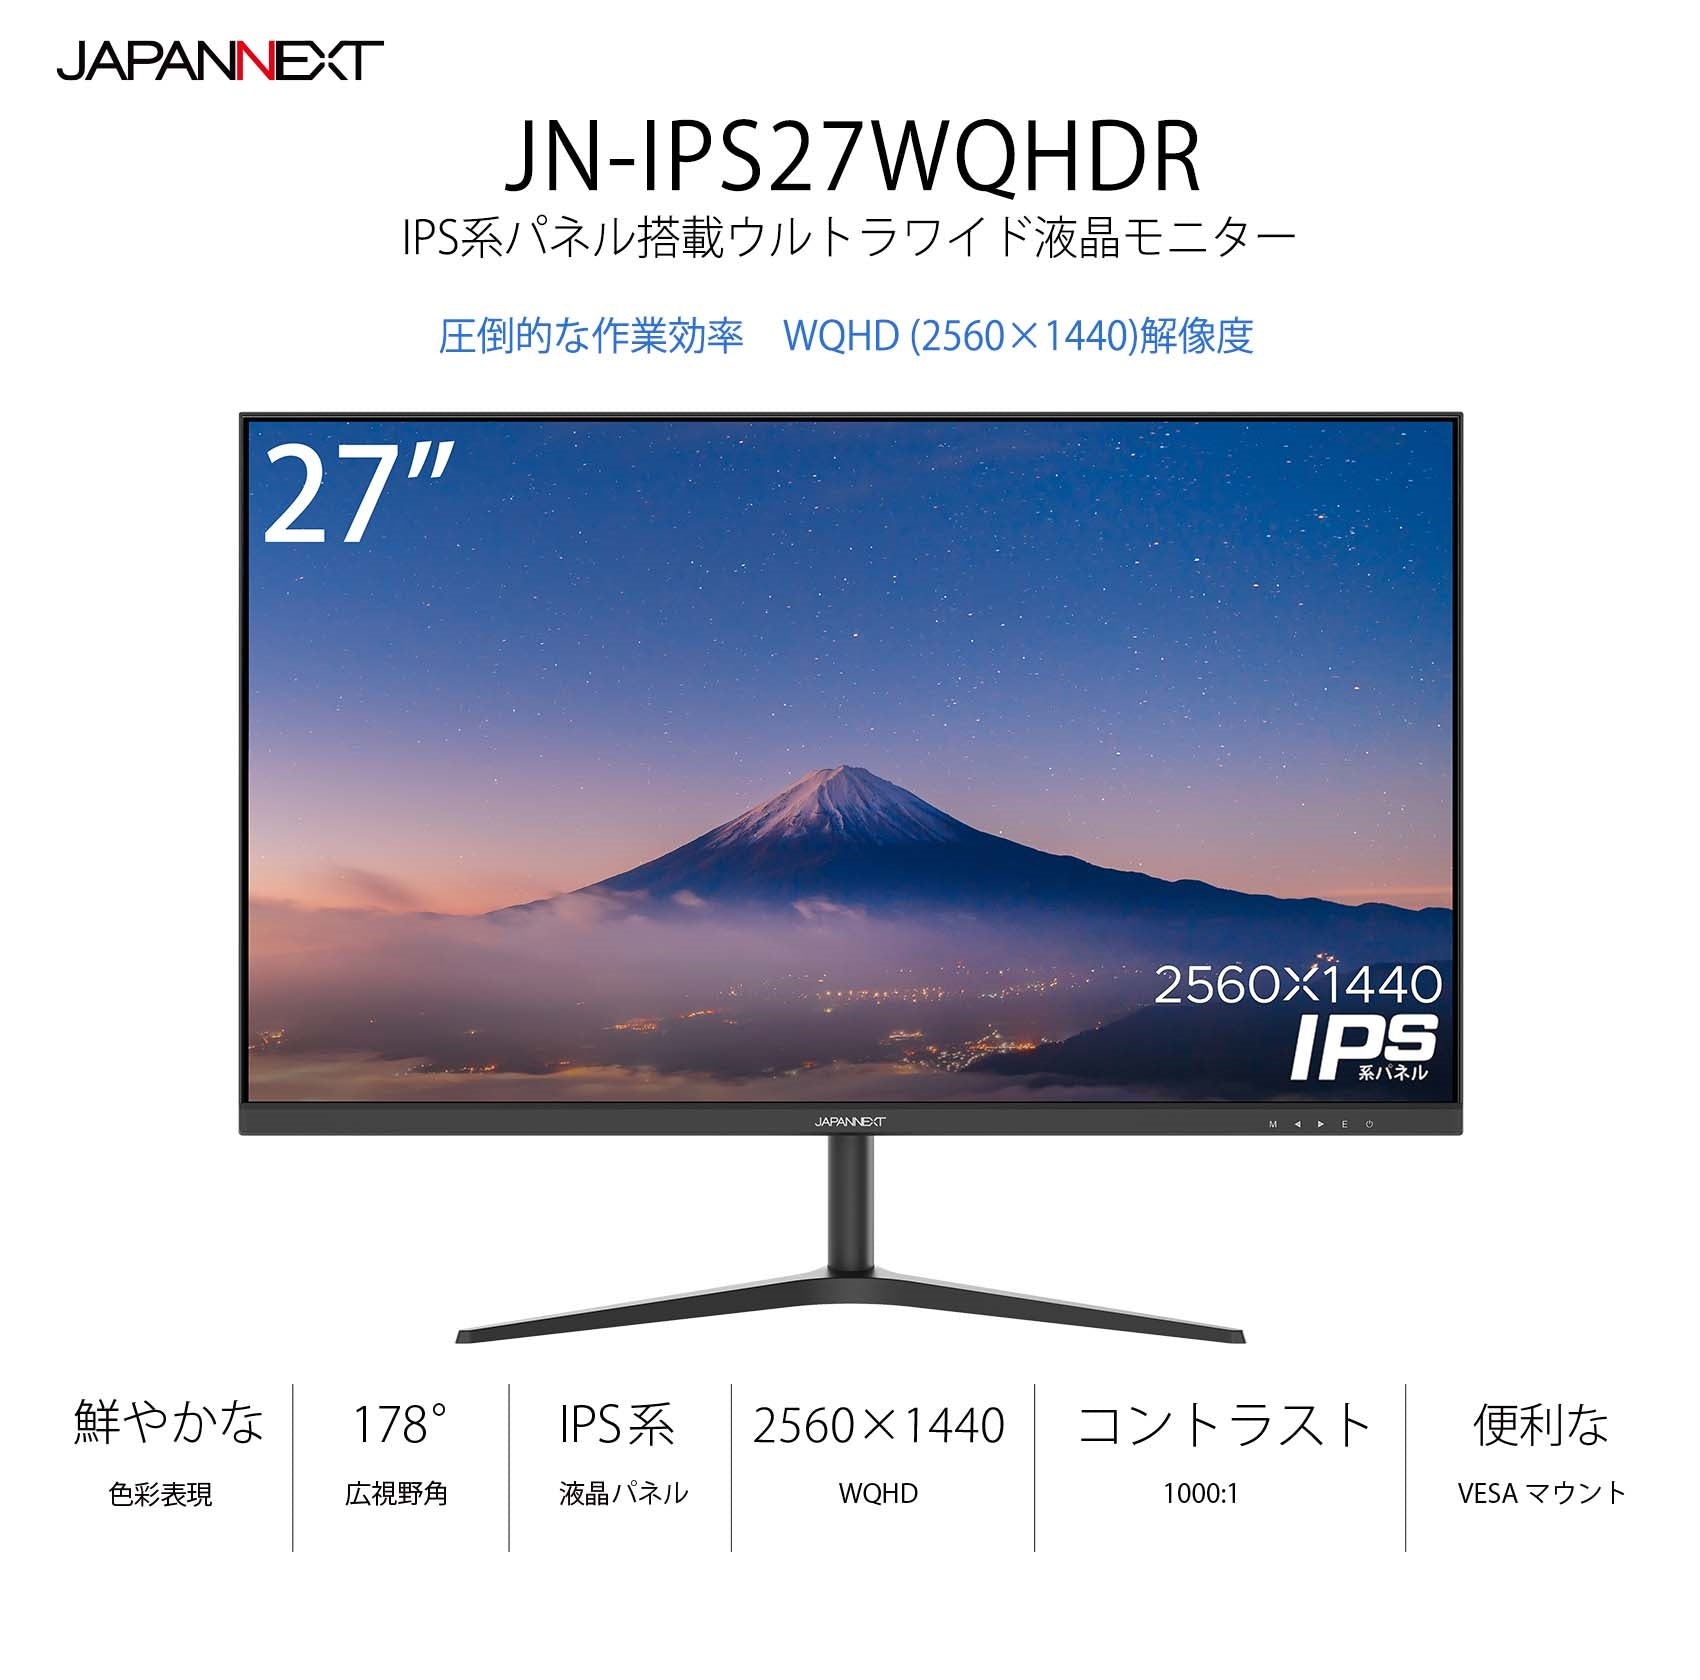 JAPANNEXT 27インチ WQHD(2560 x 1440) 液晶モニター JN-IPS27WQHDR 